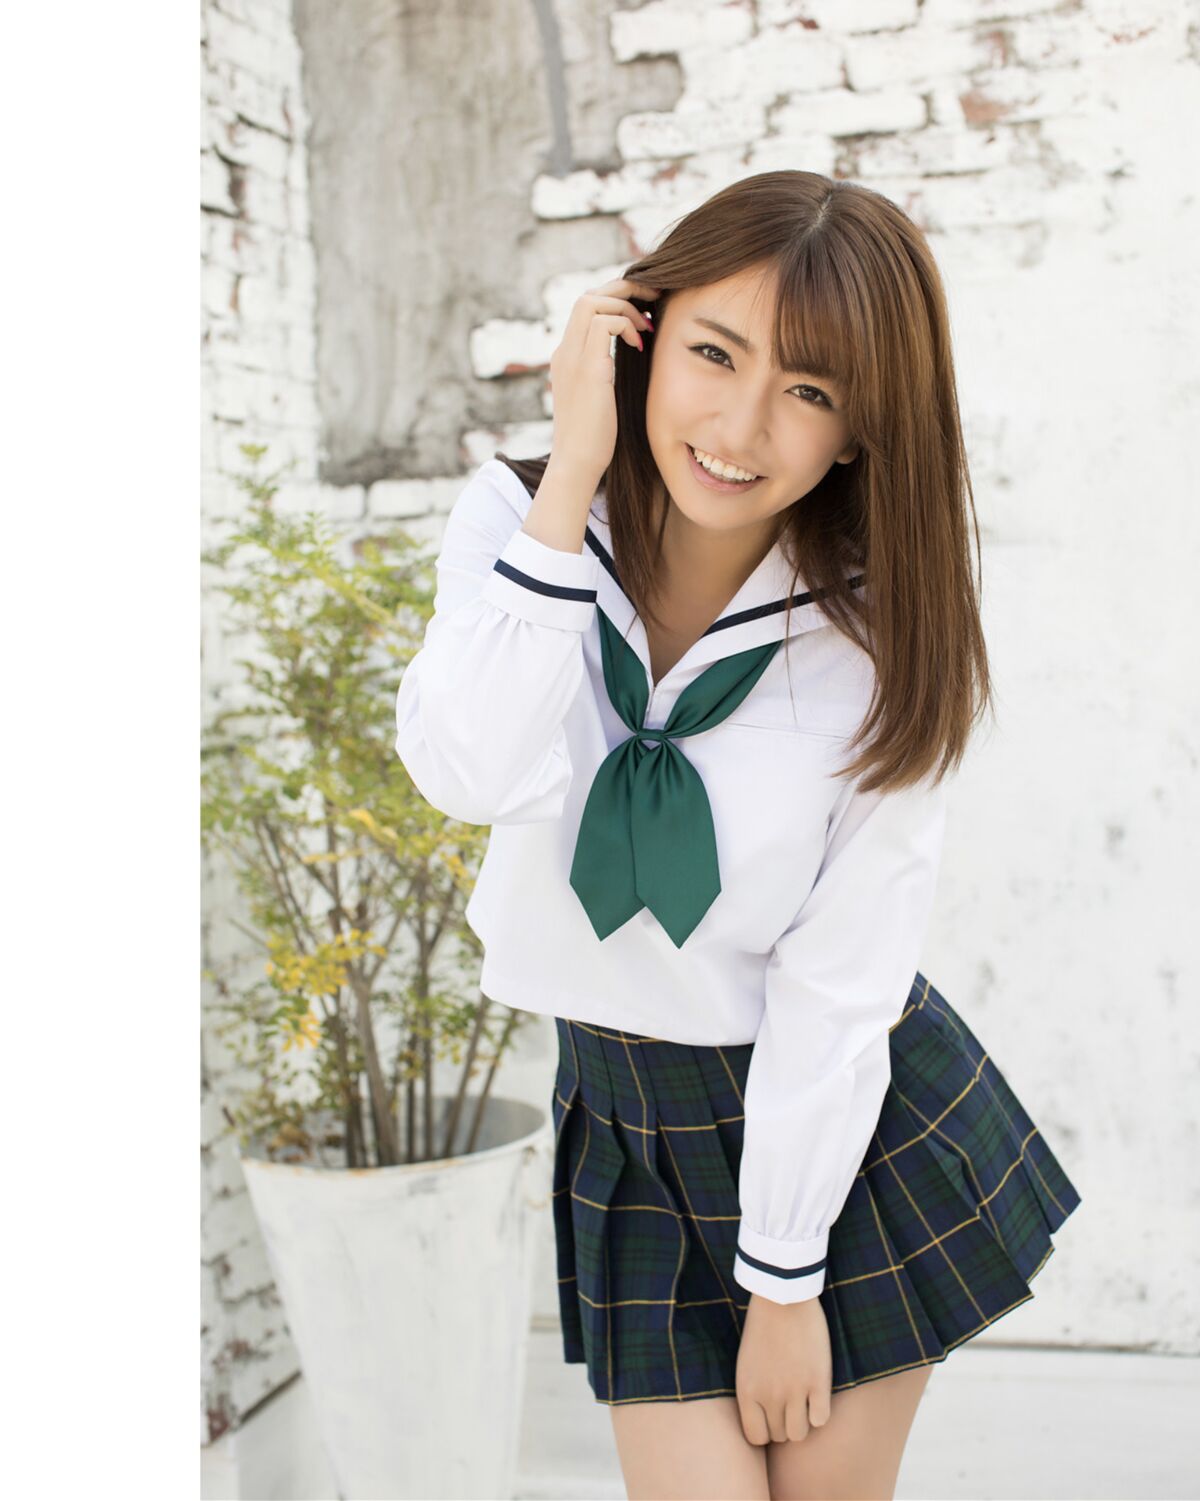 Asa Gei Secret Digital Photo Book Sister Sailor Special Youth Time Slip HOSHINO 0002 6910232807.jpg